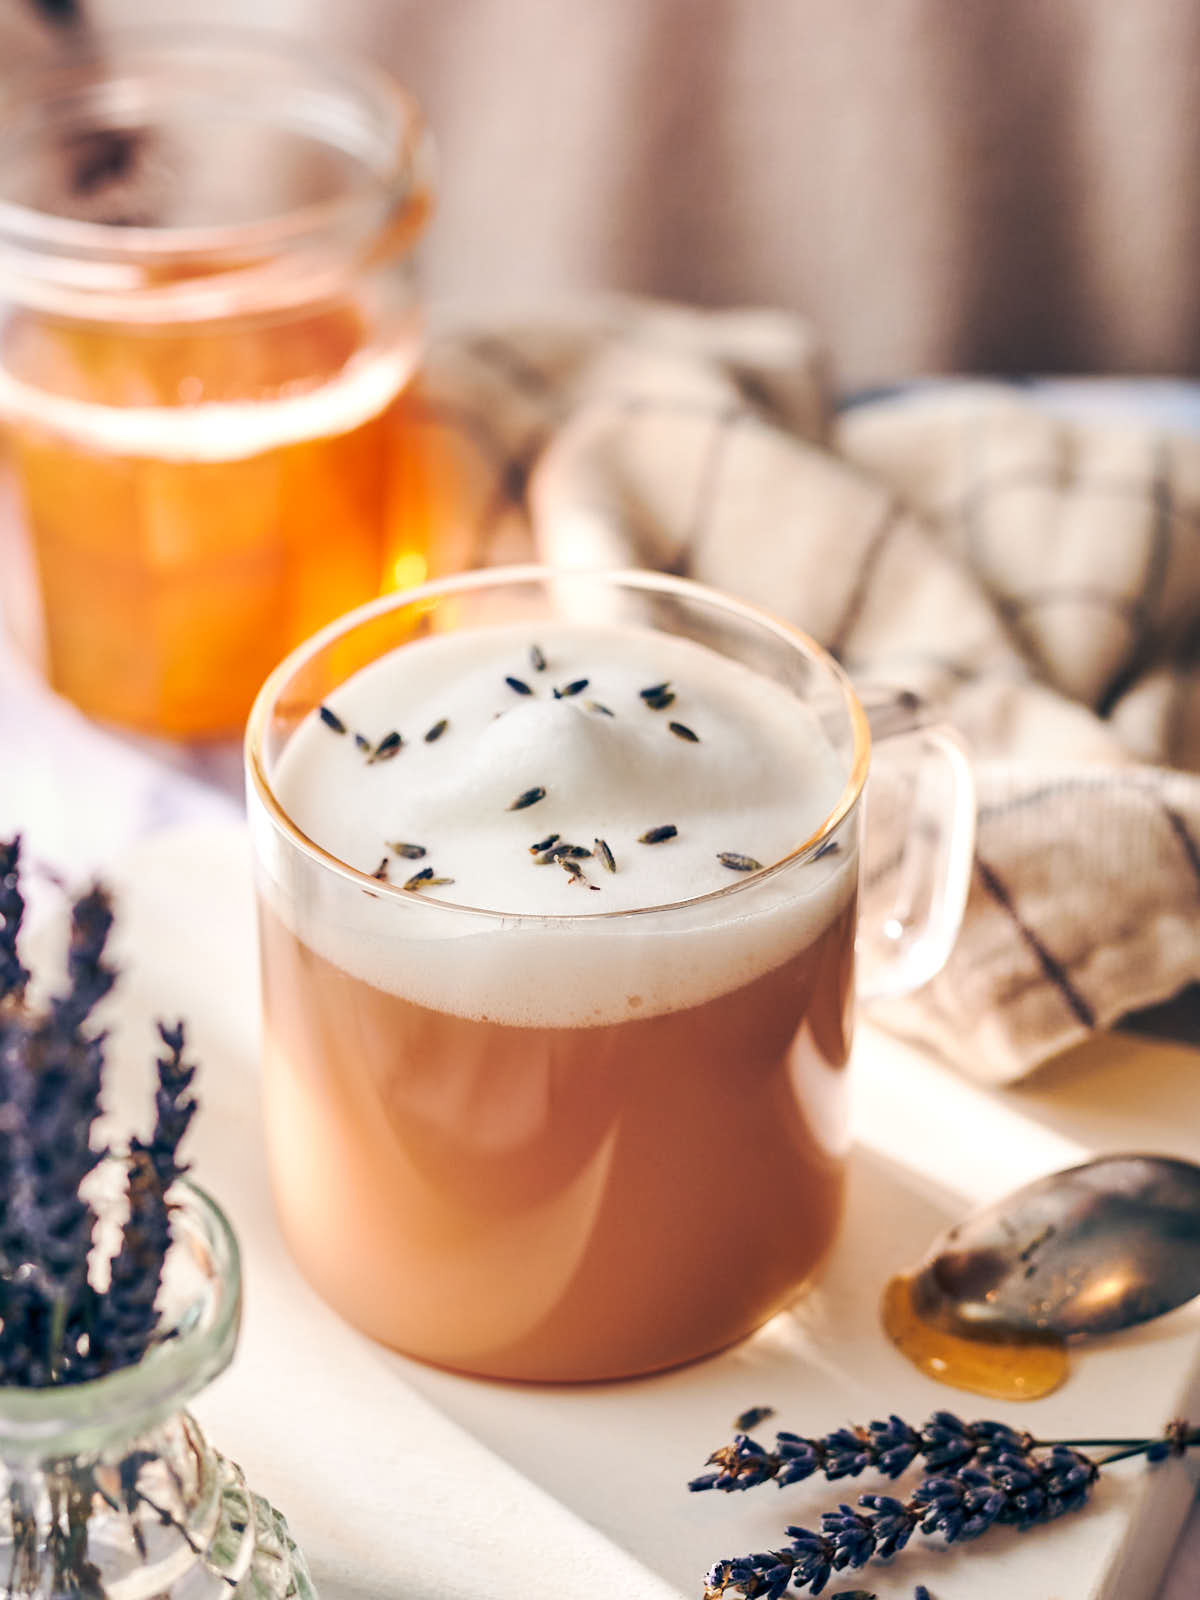 Earl grey tea latte sweetened with lavender honey in a glass mug.